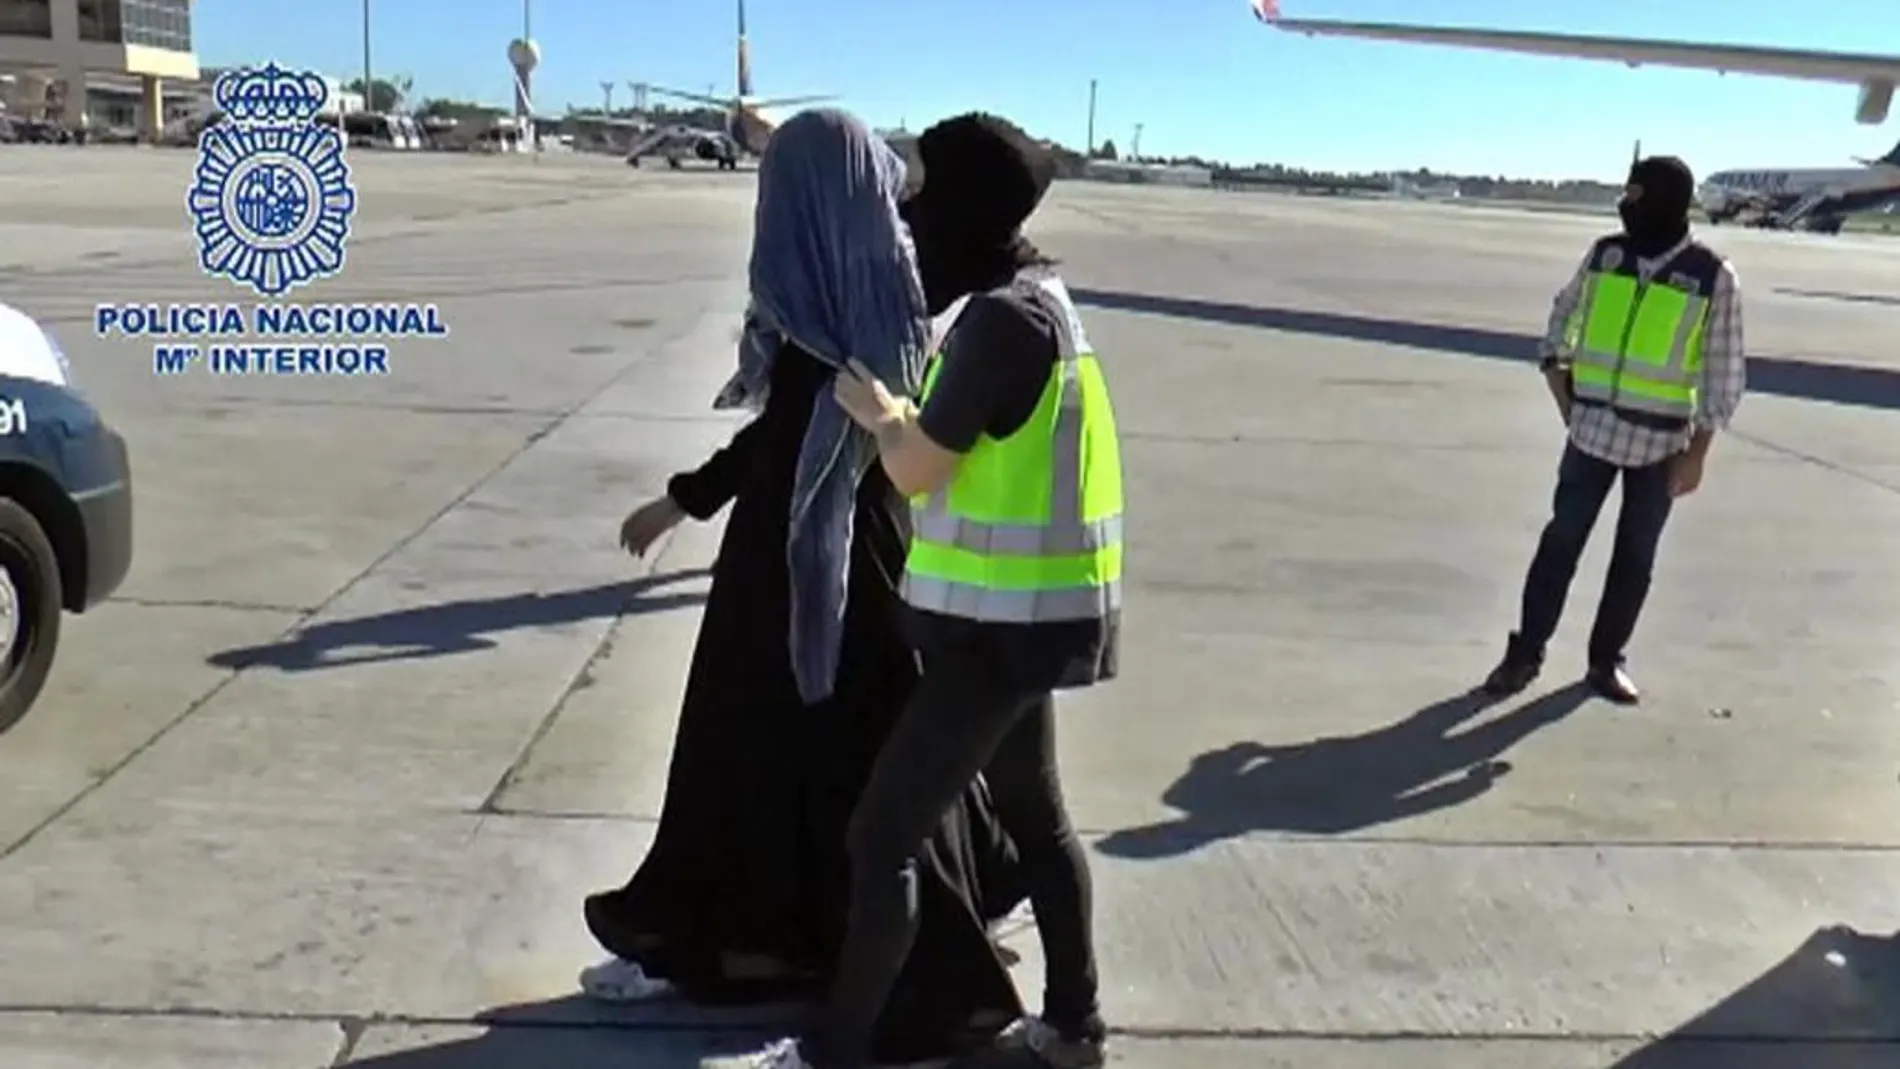 La mujer ha sido detenida tras volver de la frontera rurco-siria